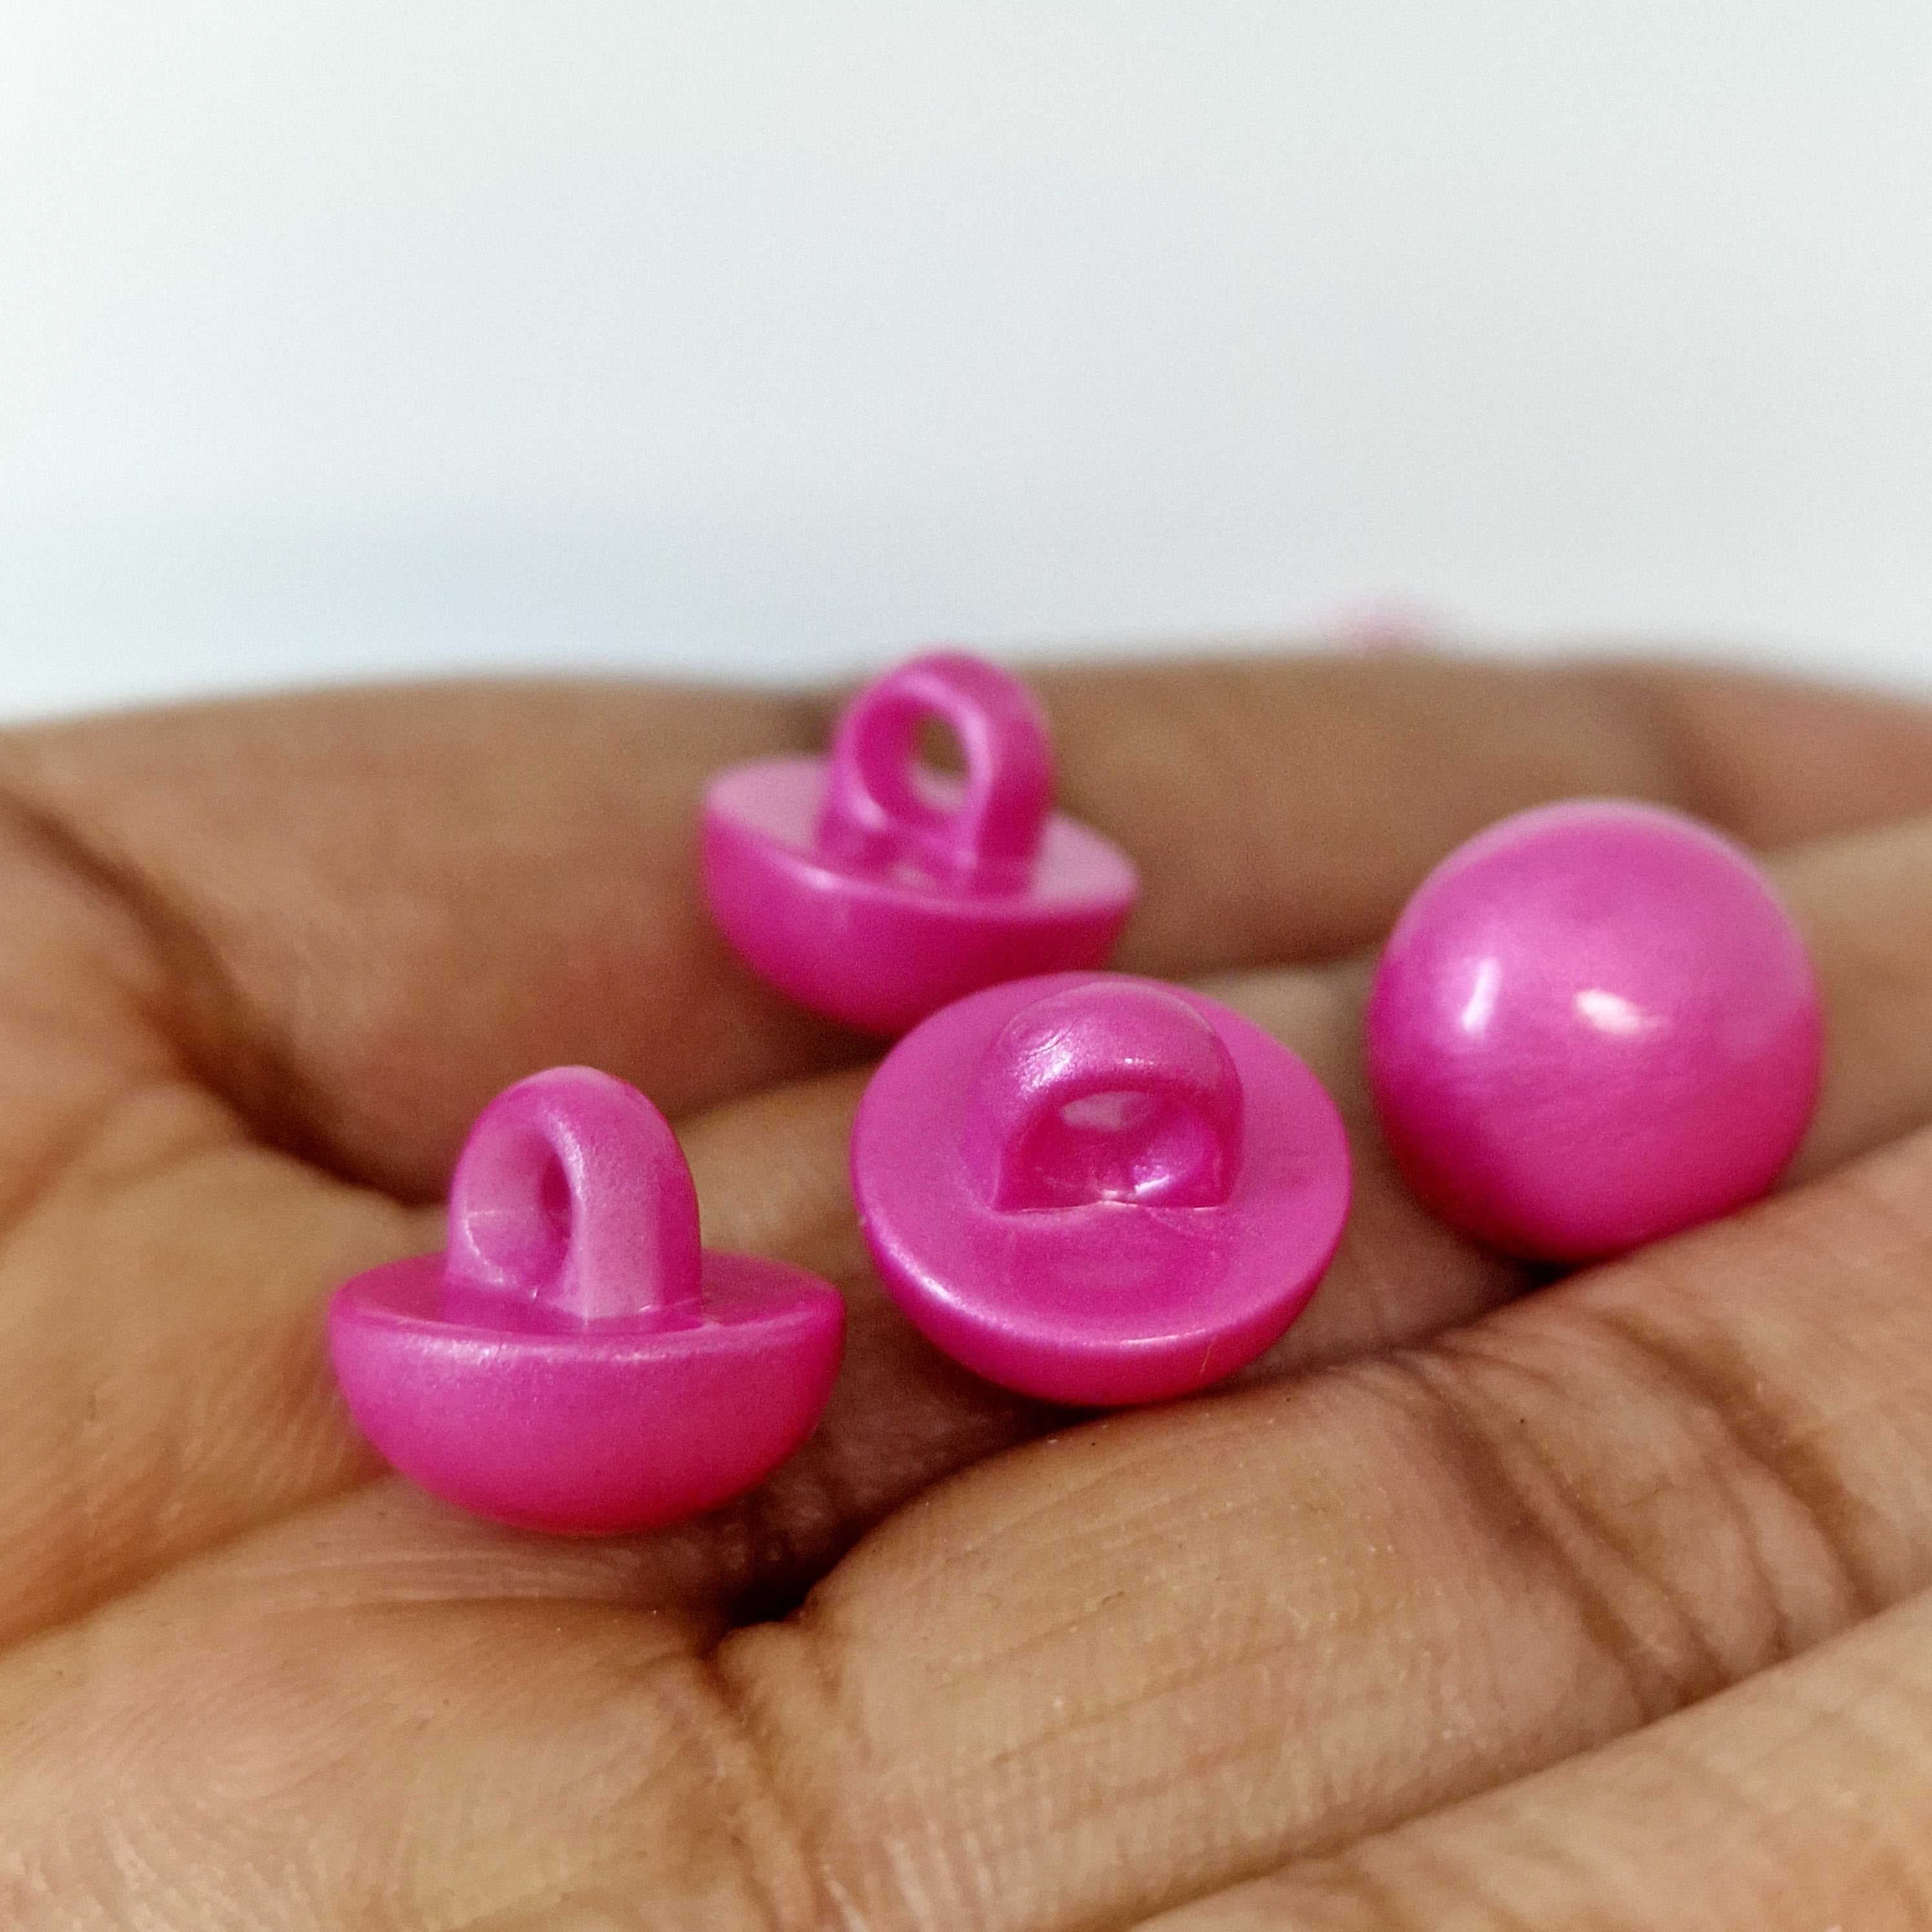 MajorCrafts 24pcs 11mm Dark Pink High-Grade Acrylic Small Round Sewing Mushroom Shank Buttons